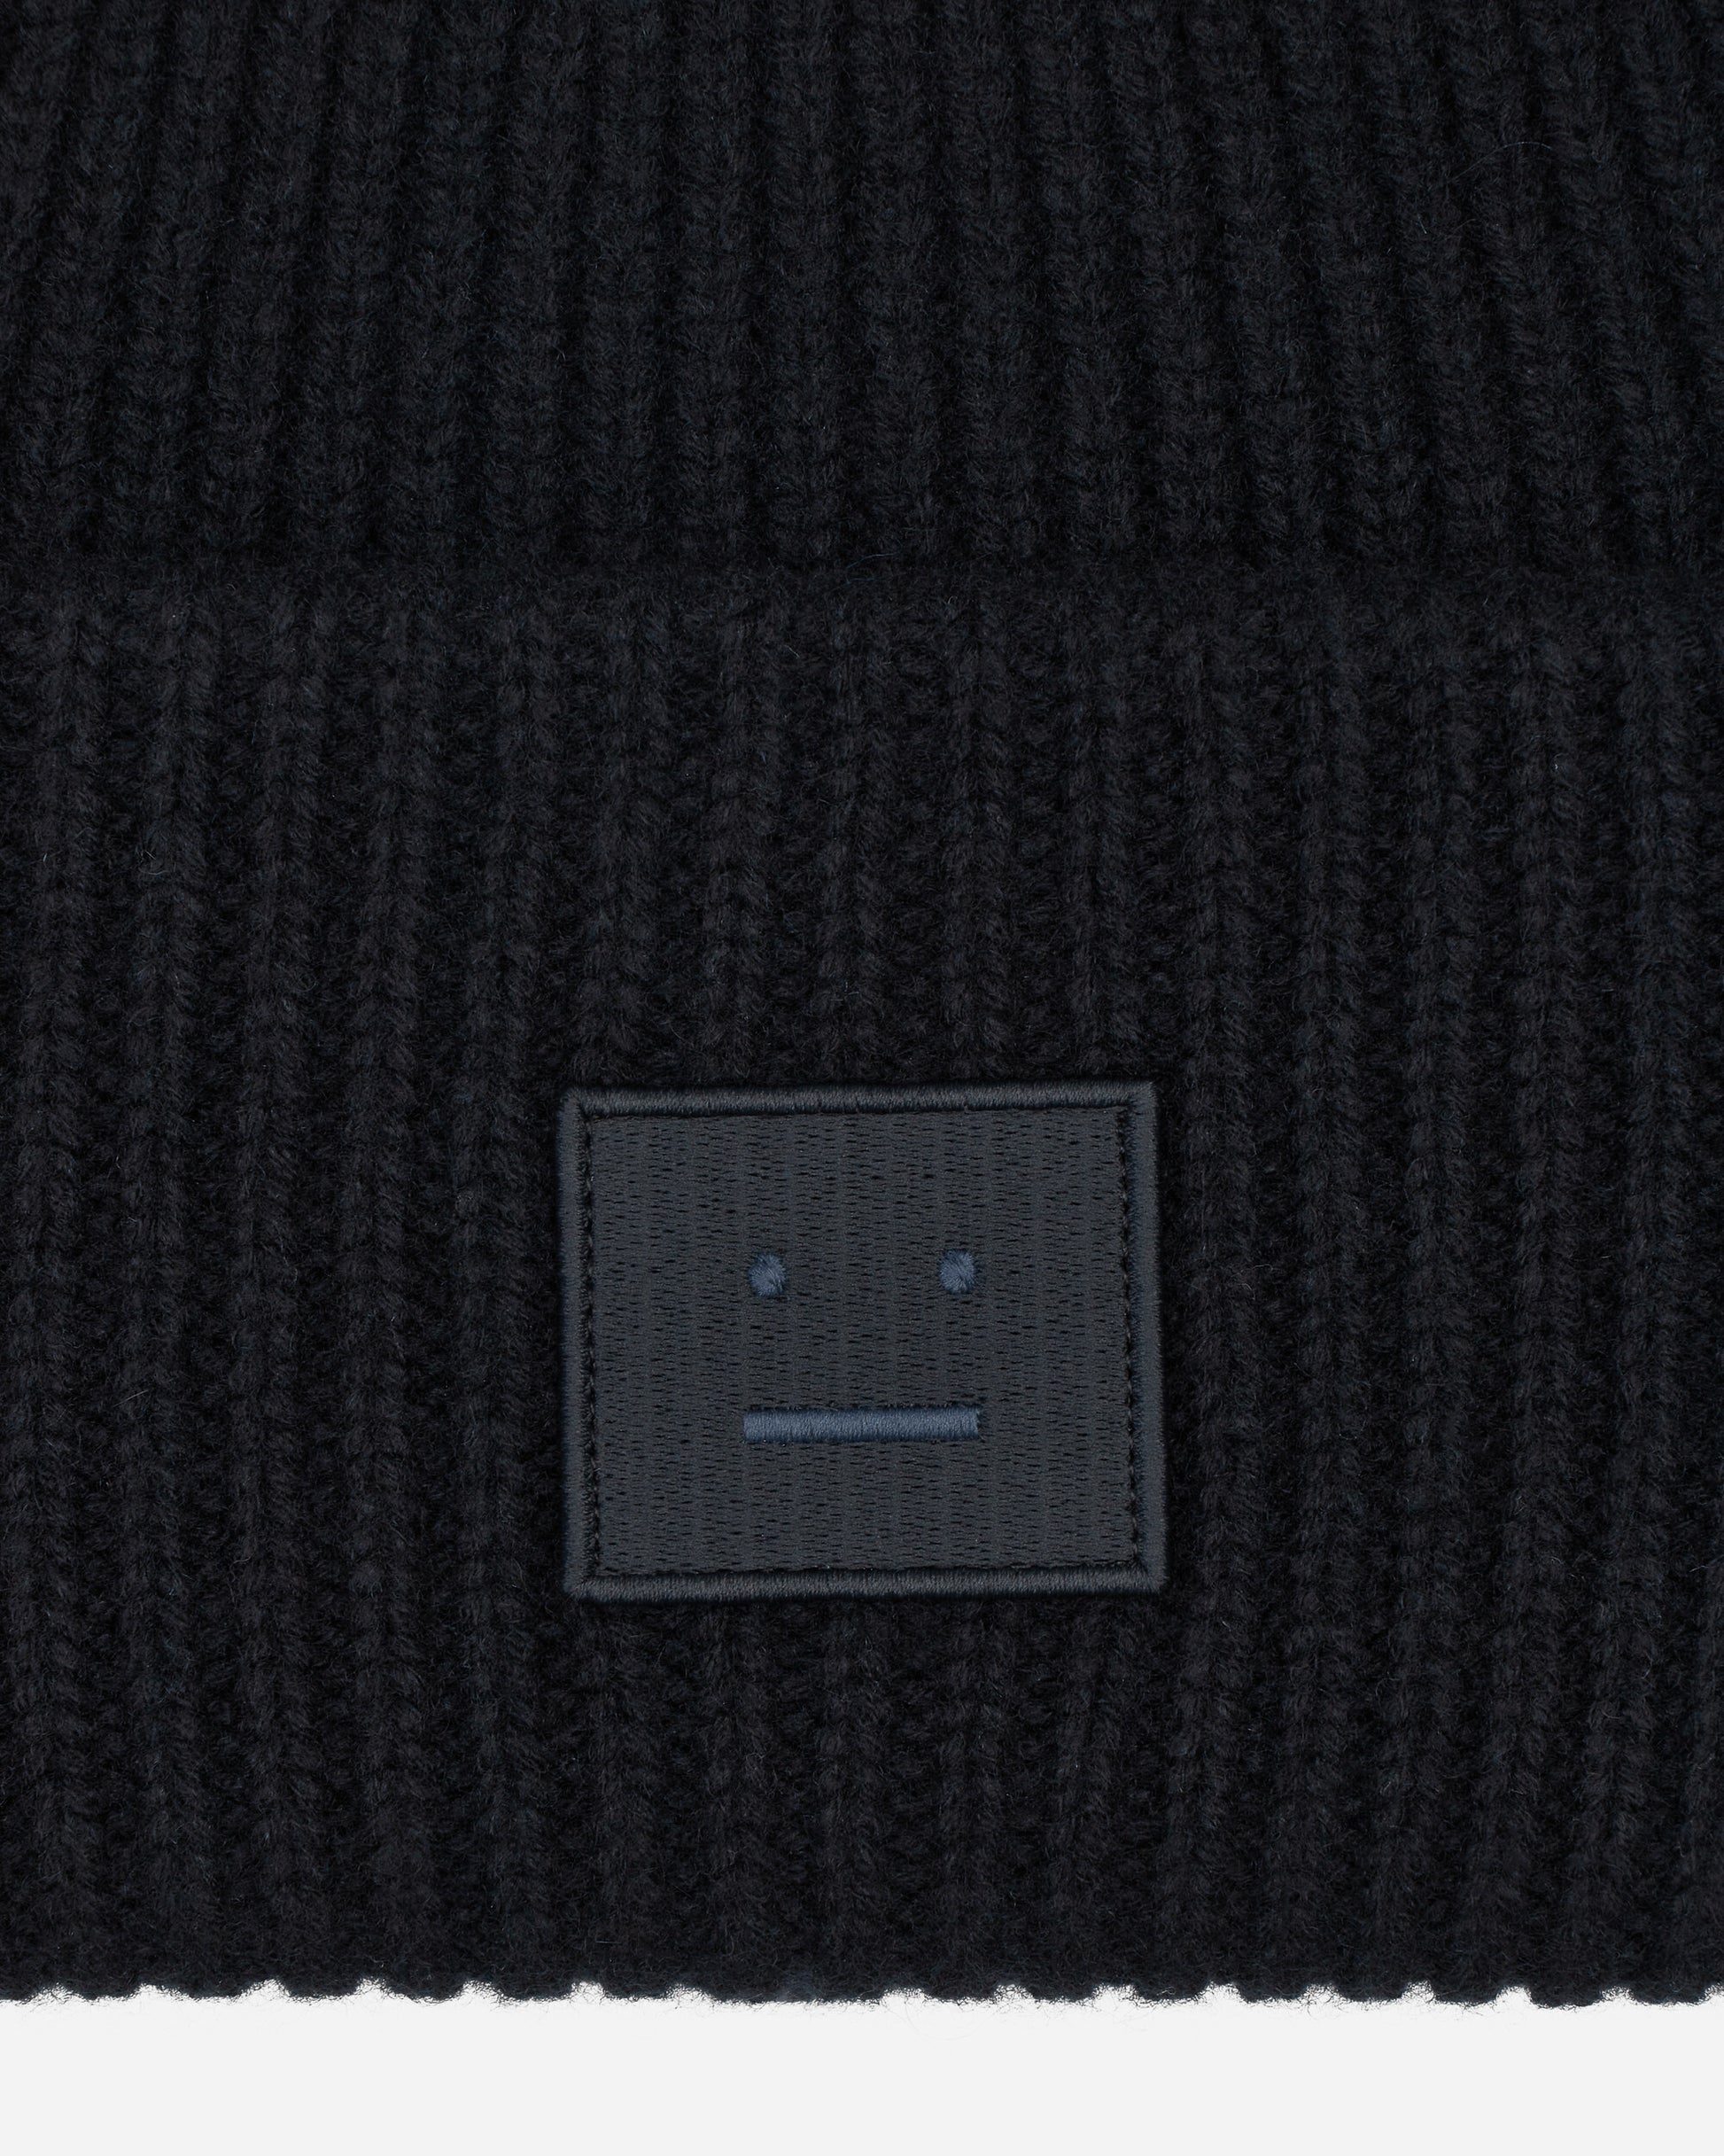 Acne Studios Face Black Hats Beanies C40135- 900